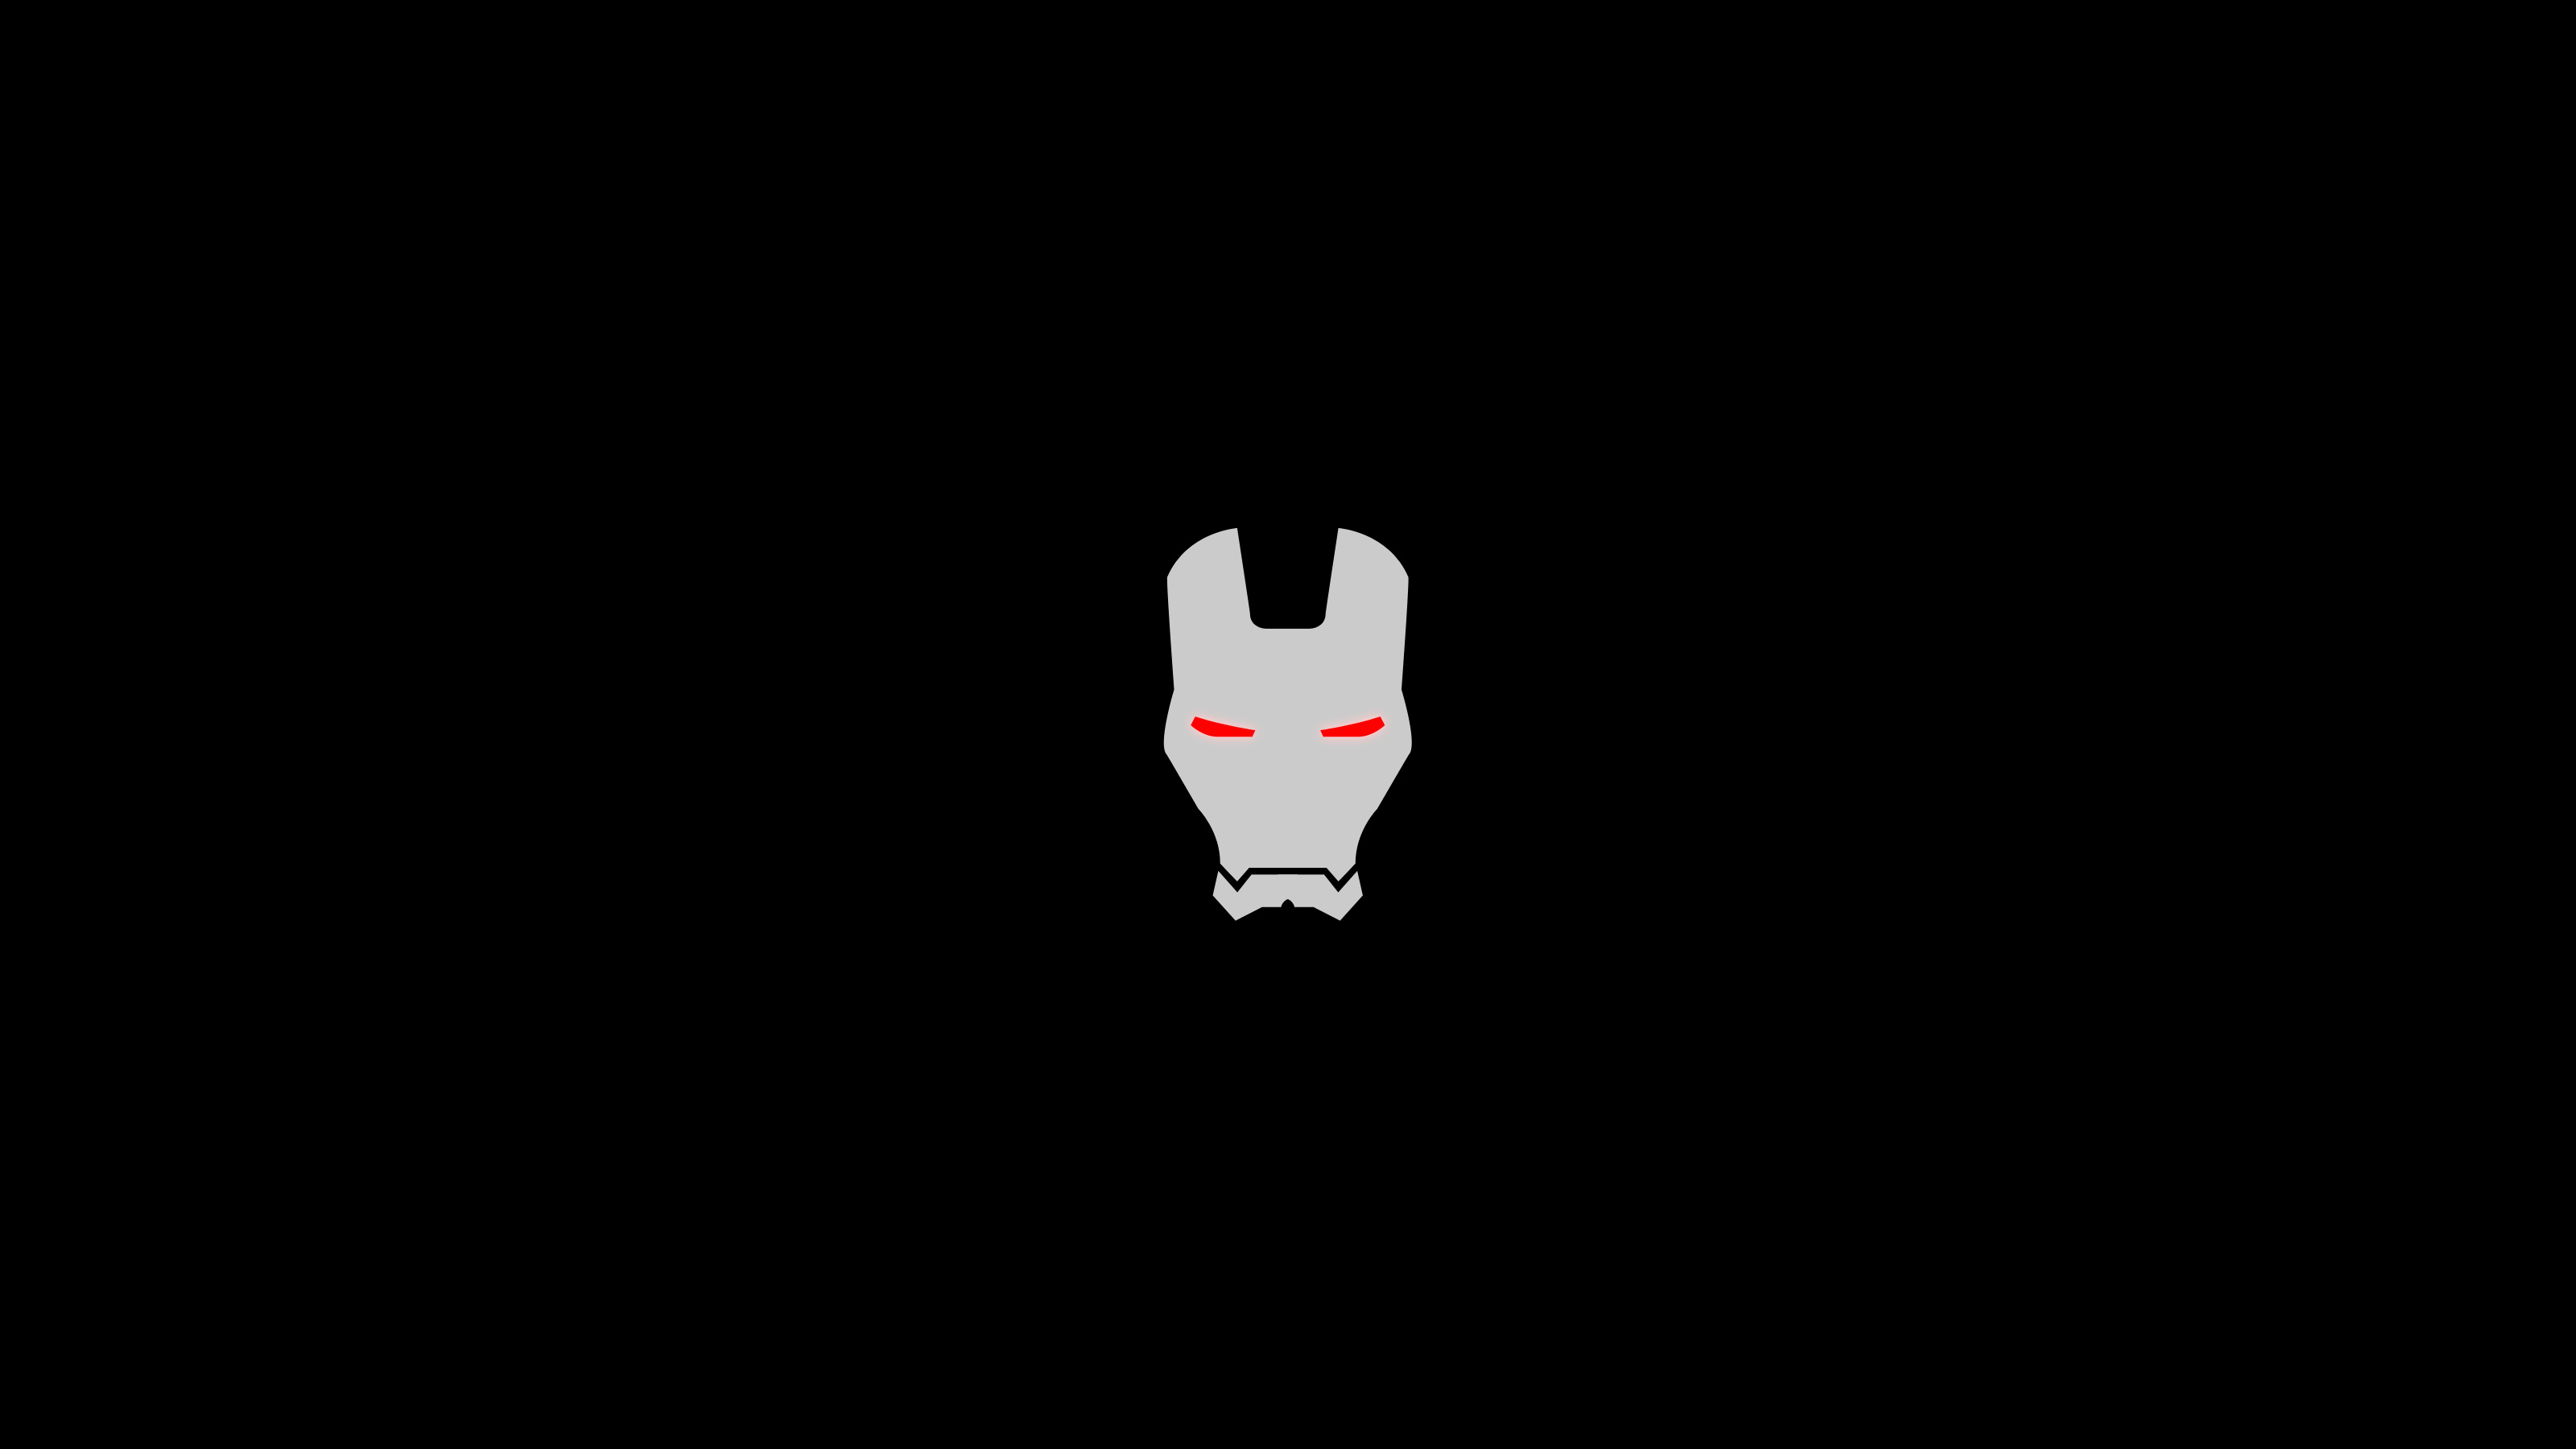 Iron Man logo wallpapers, Bold and iconic, Movie symbol, Fans' favorite, 3200x1800 HD Desktop